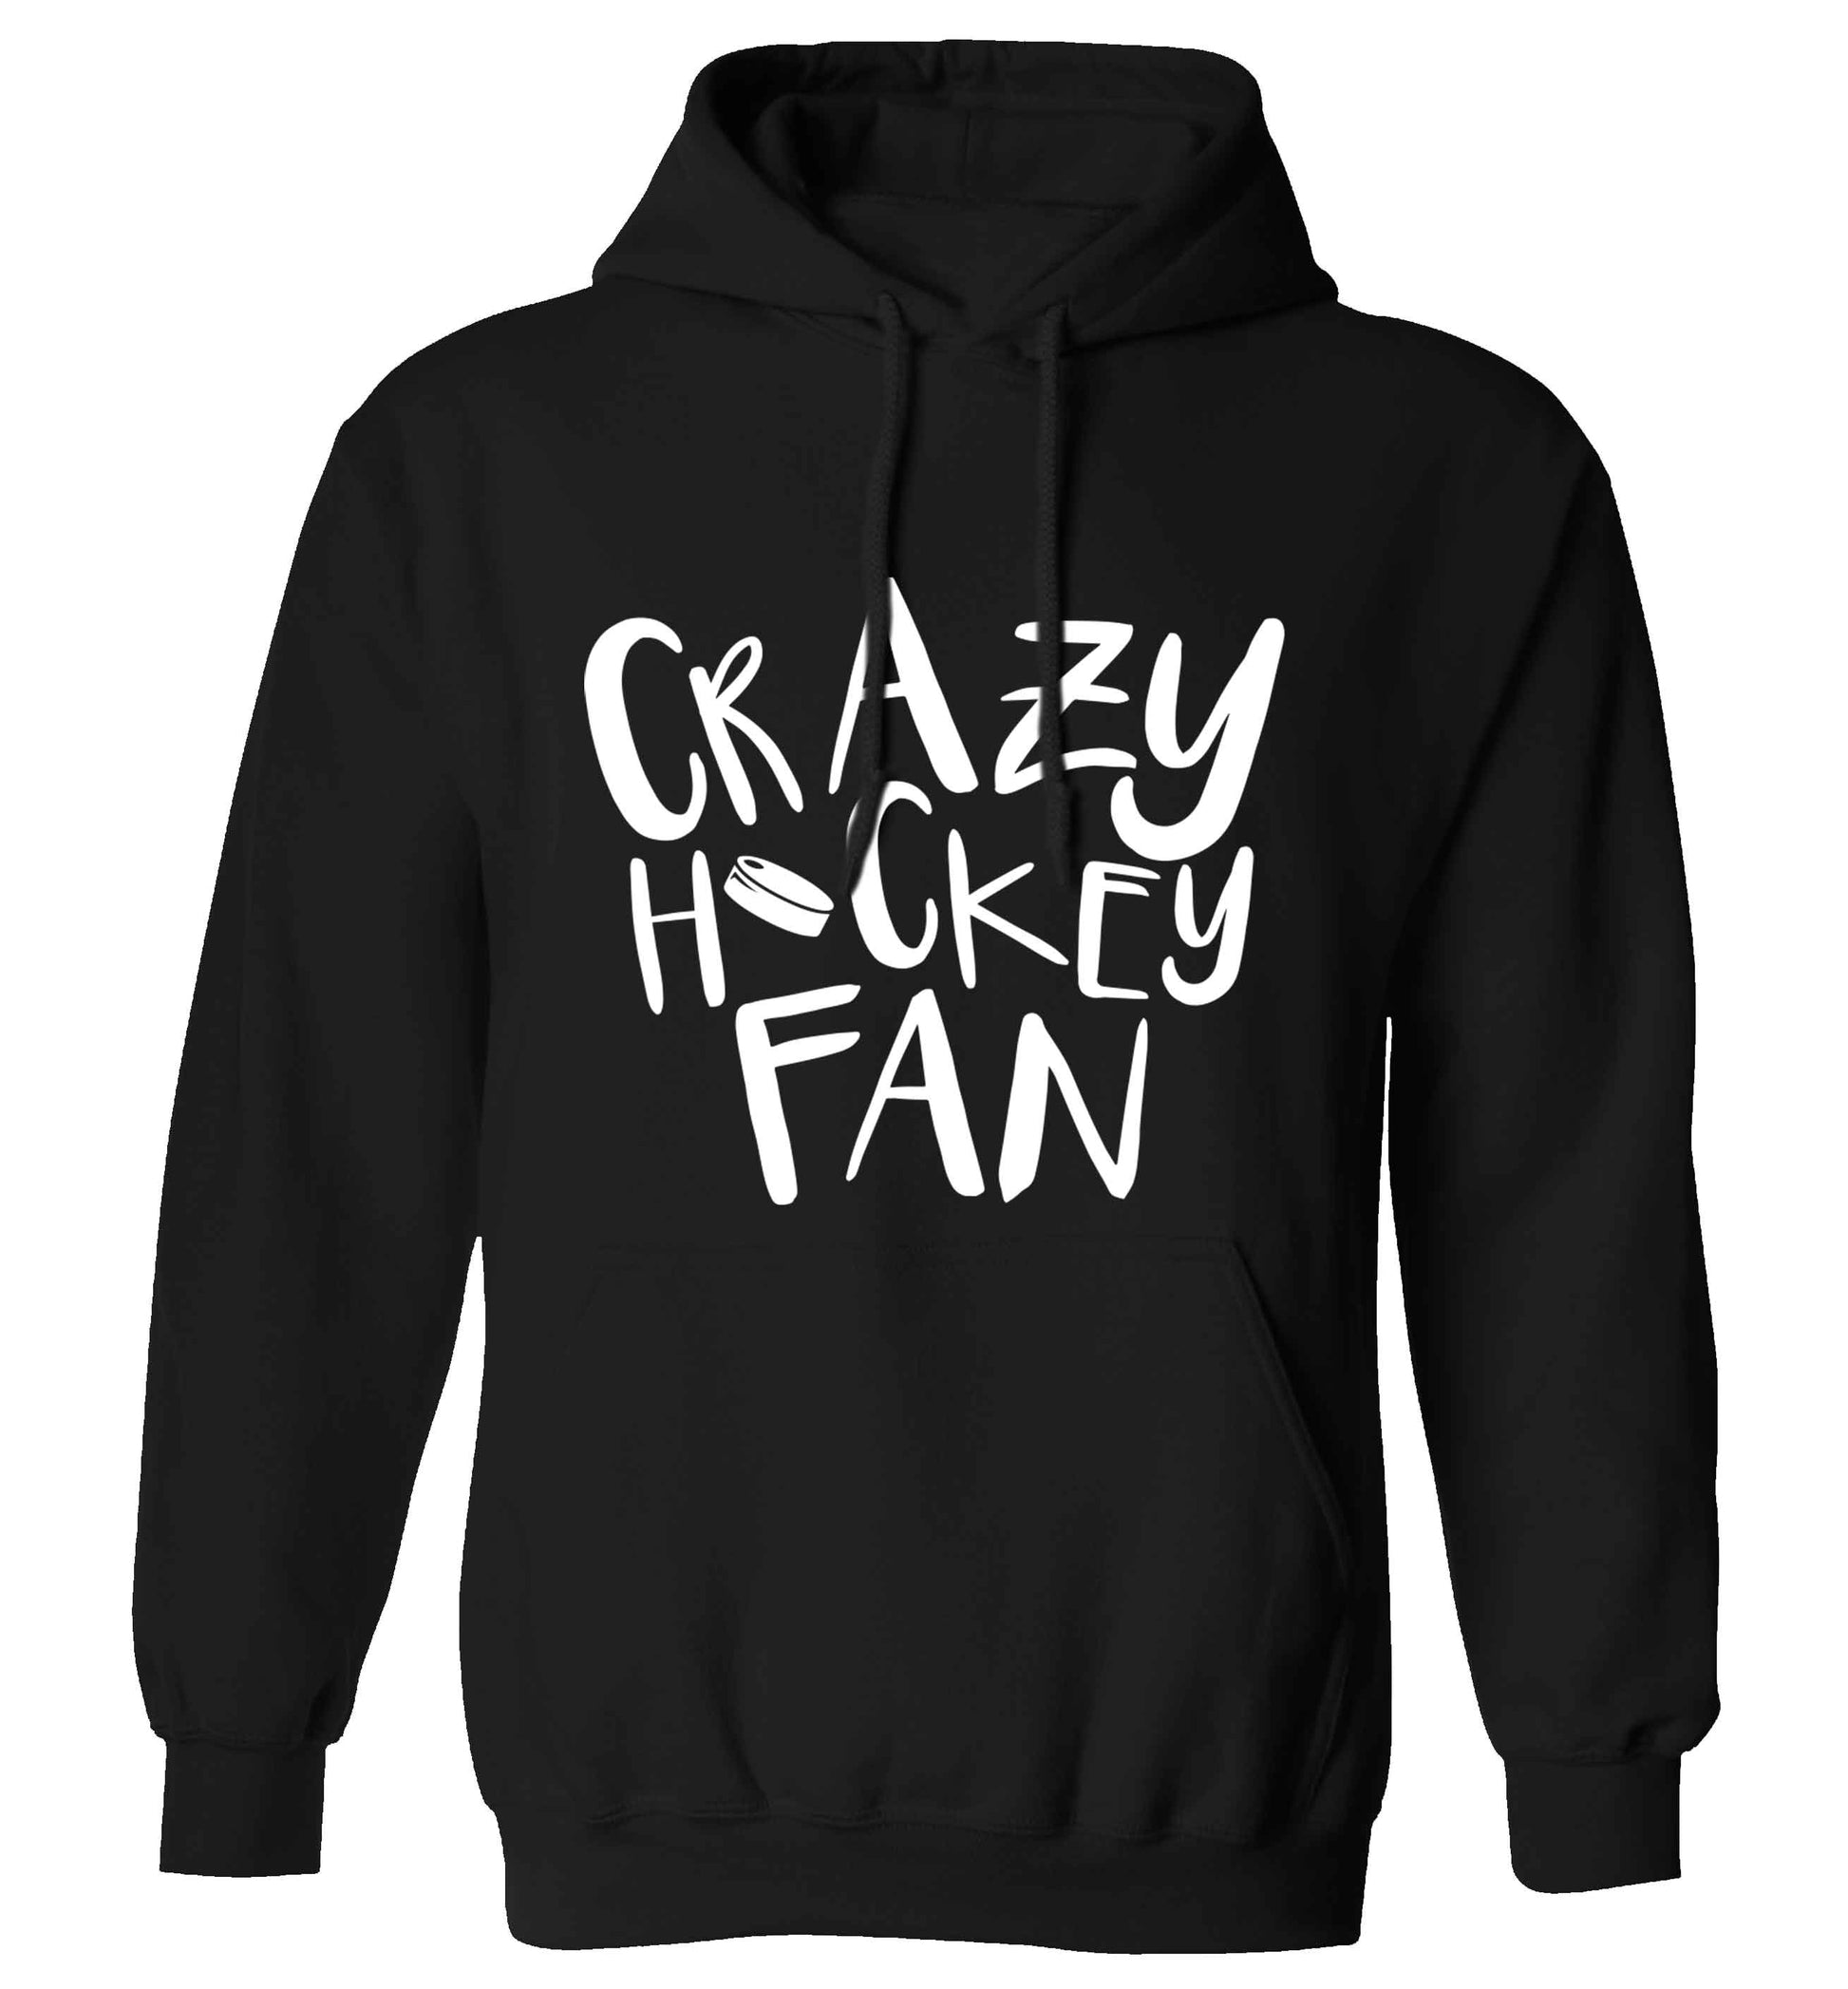 Crazy hockey fan adults unisex black hoodie 2XL